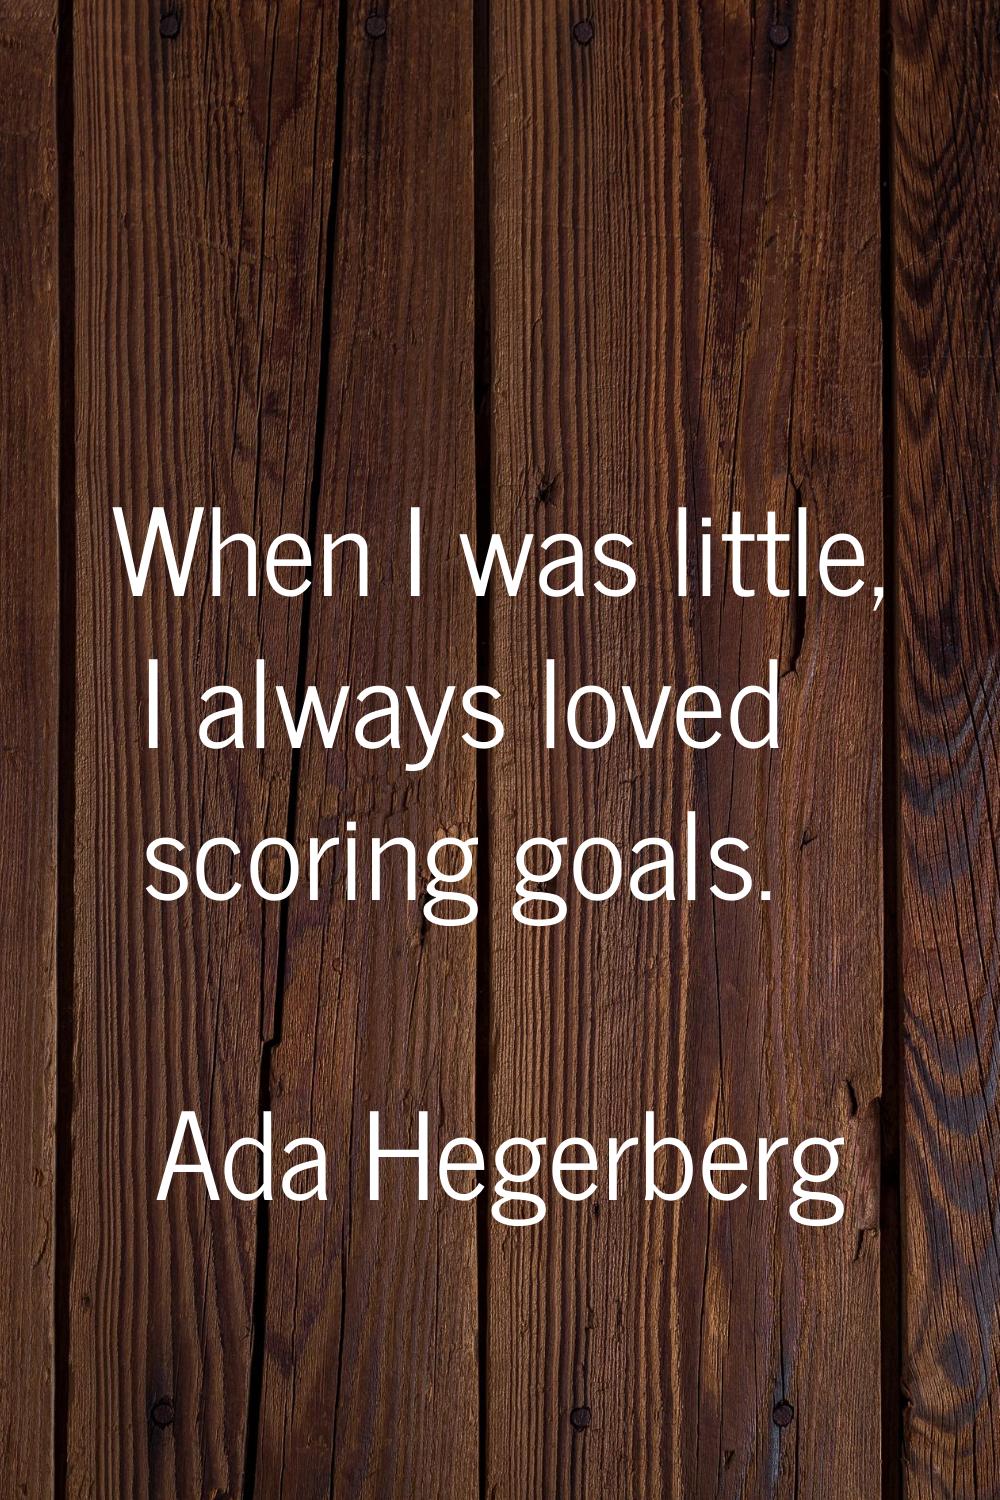 When I was little, I always loved scoring goals.